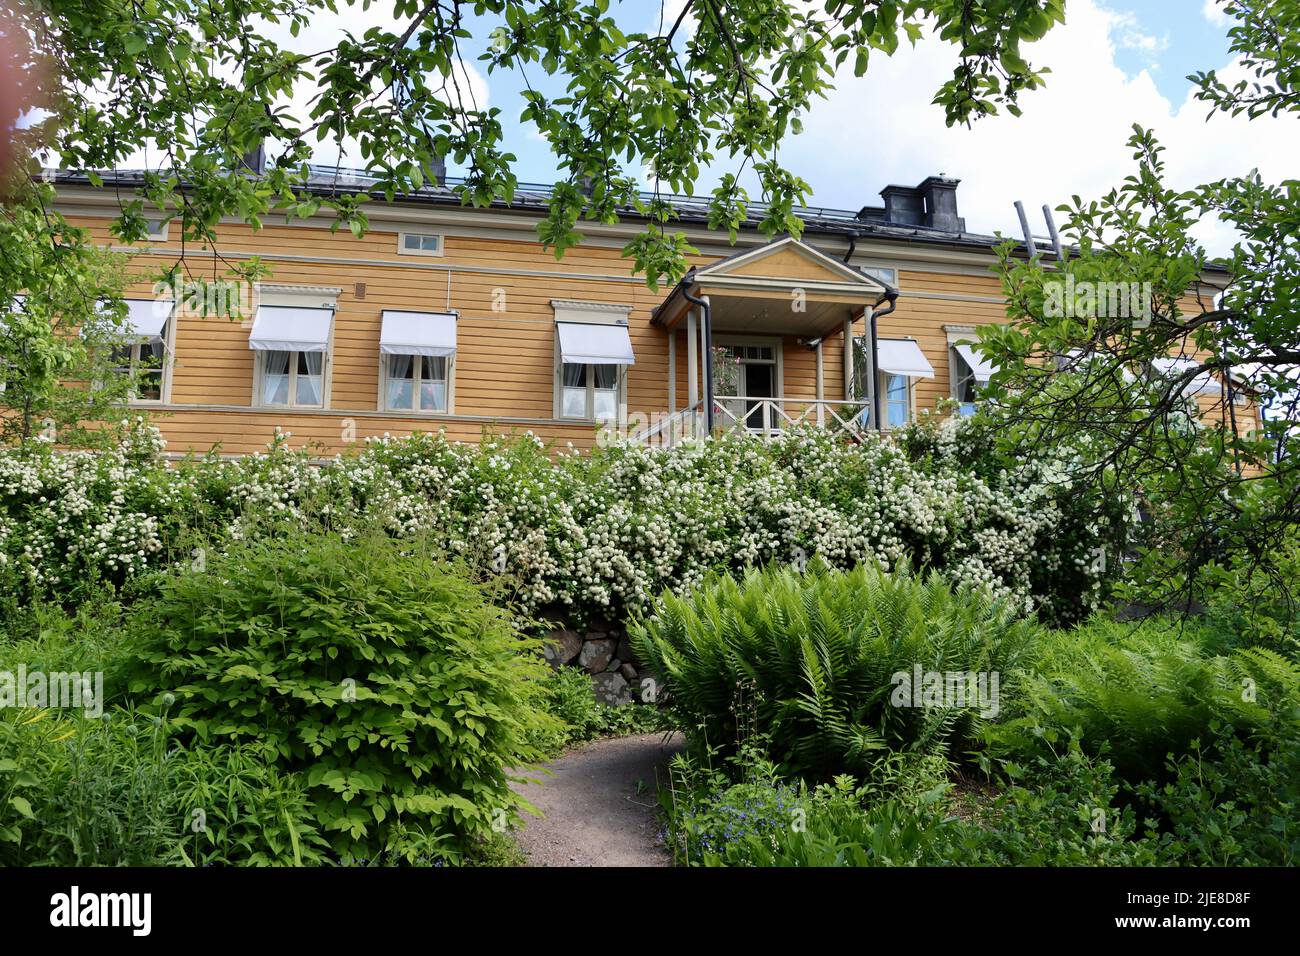 National poet Johan Ludvig Runeberg's home and garden in Porvoo, Finland Stock Photo